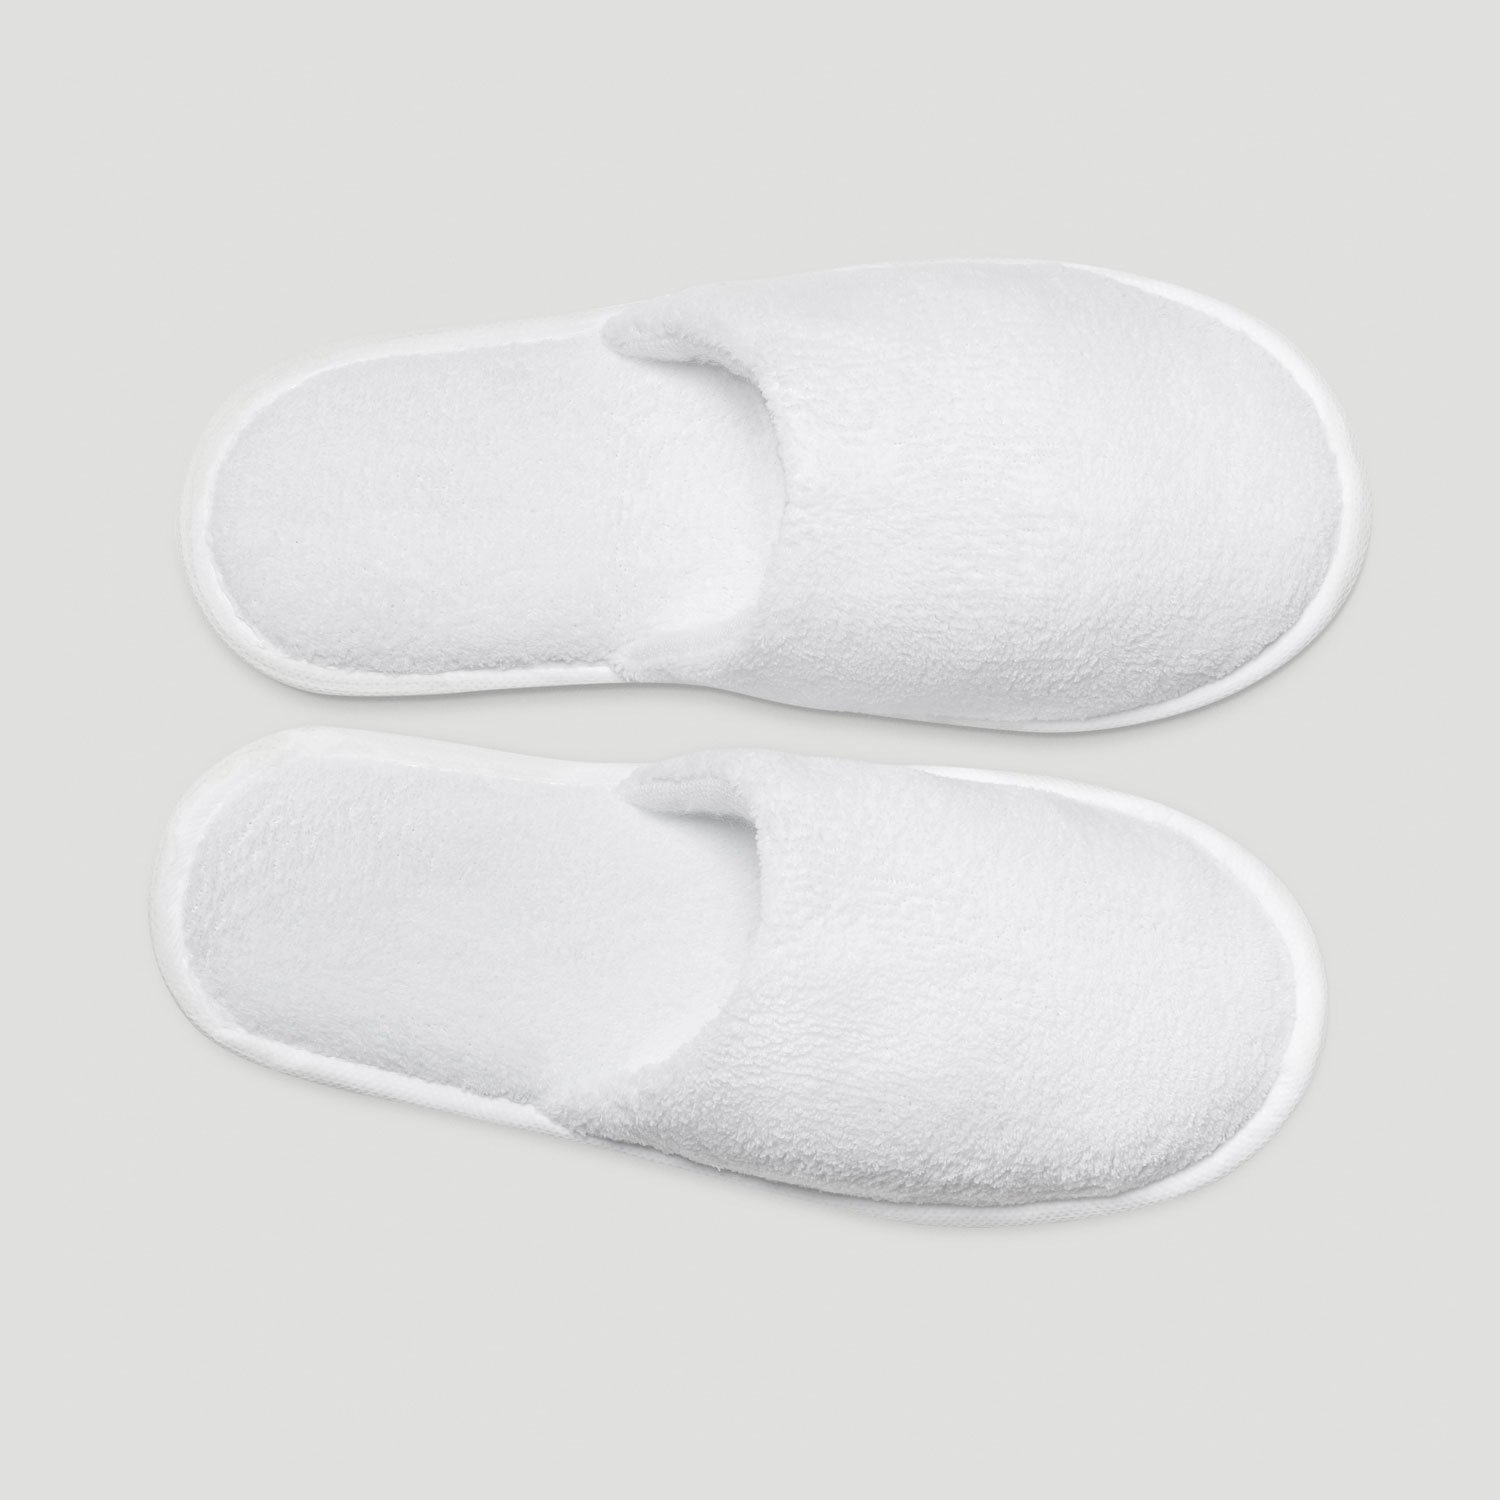 White Closed Toe Adult Fleece Warm Slippers - 6 pack-Robemart.com